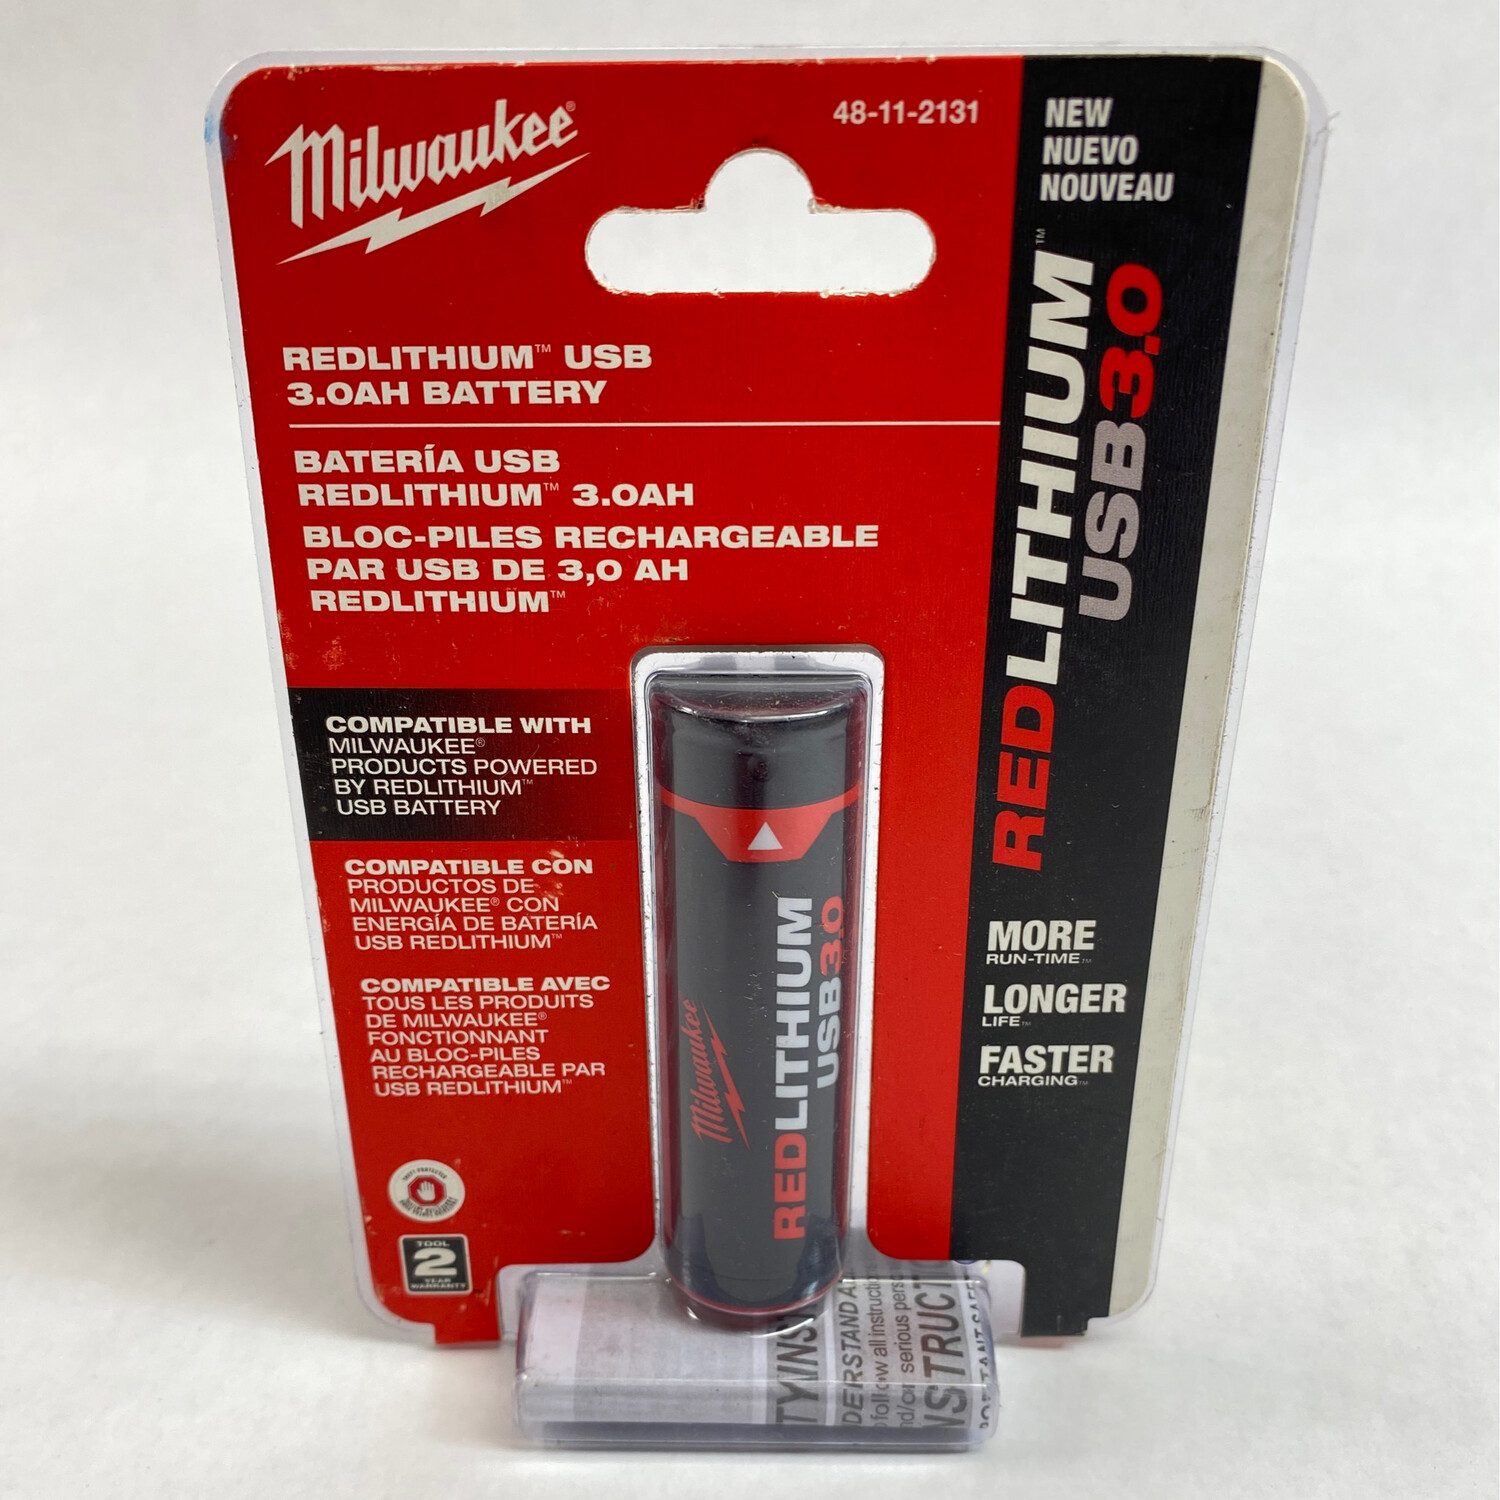 strejke problem leder Milwaukee RedLithium USB 3.0Ah Battery, 48-11-2131 - Shop - Tool Swapper